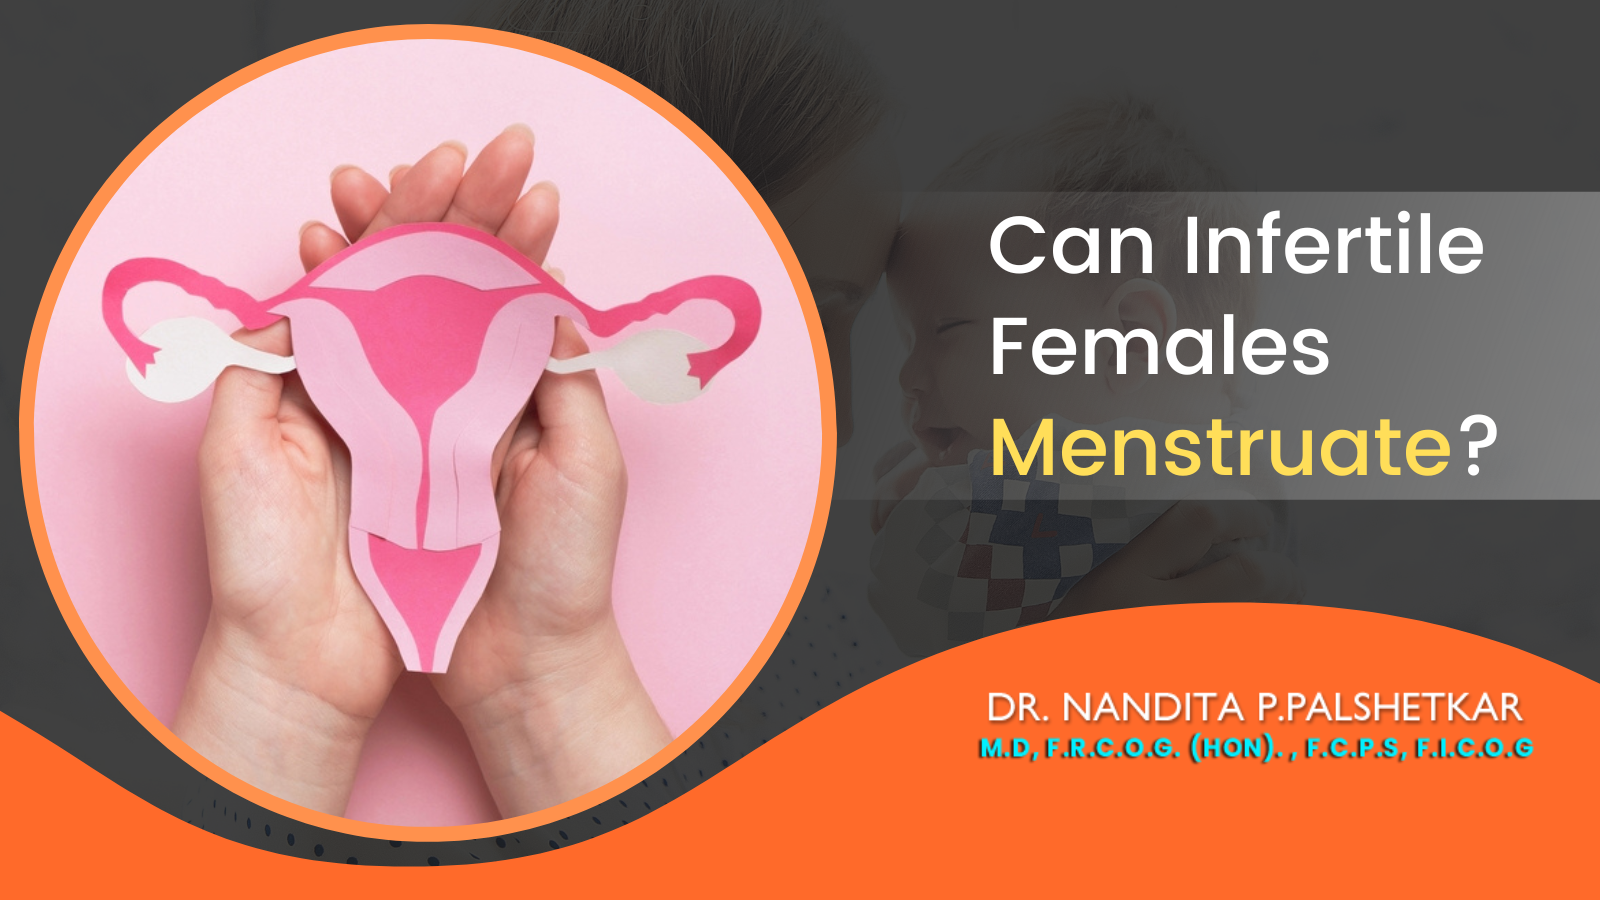 Can Infertile Females Menstruate?